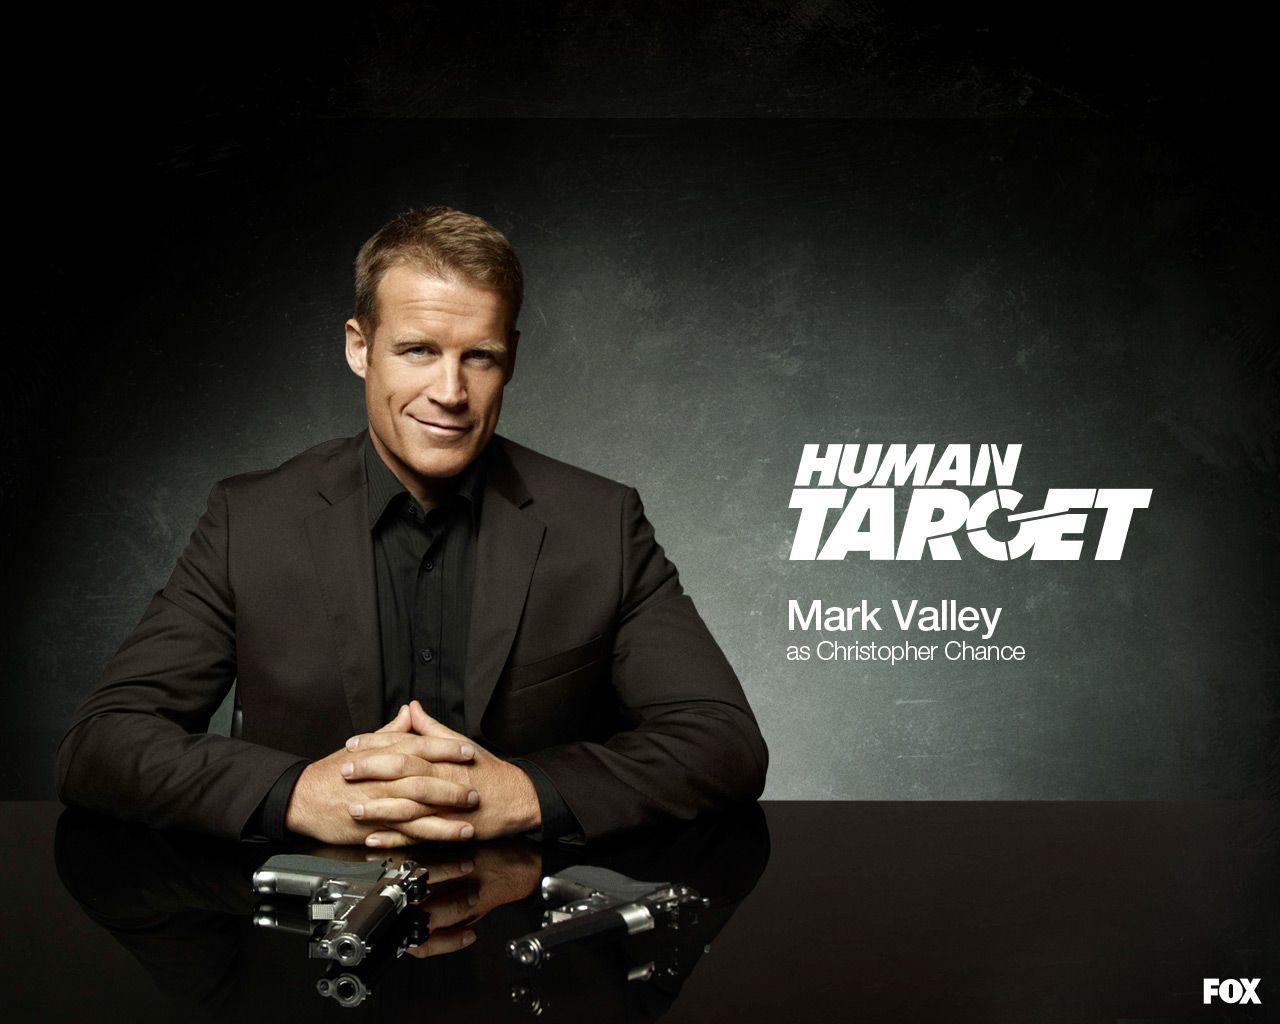 Human Target Hottie Mark Valley & Contest. Caridad.com®